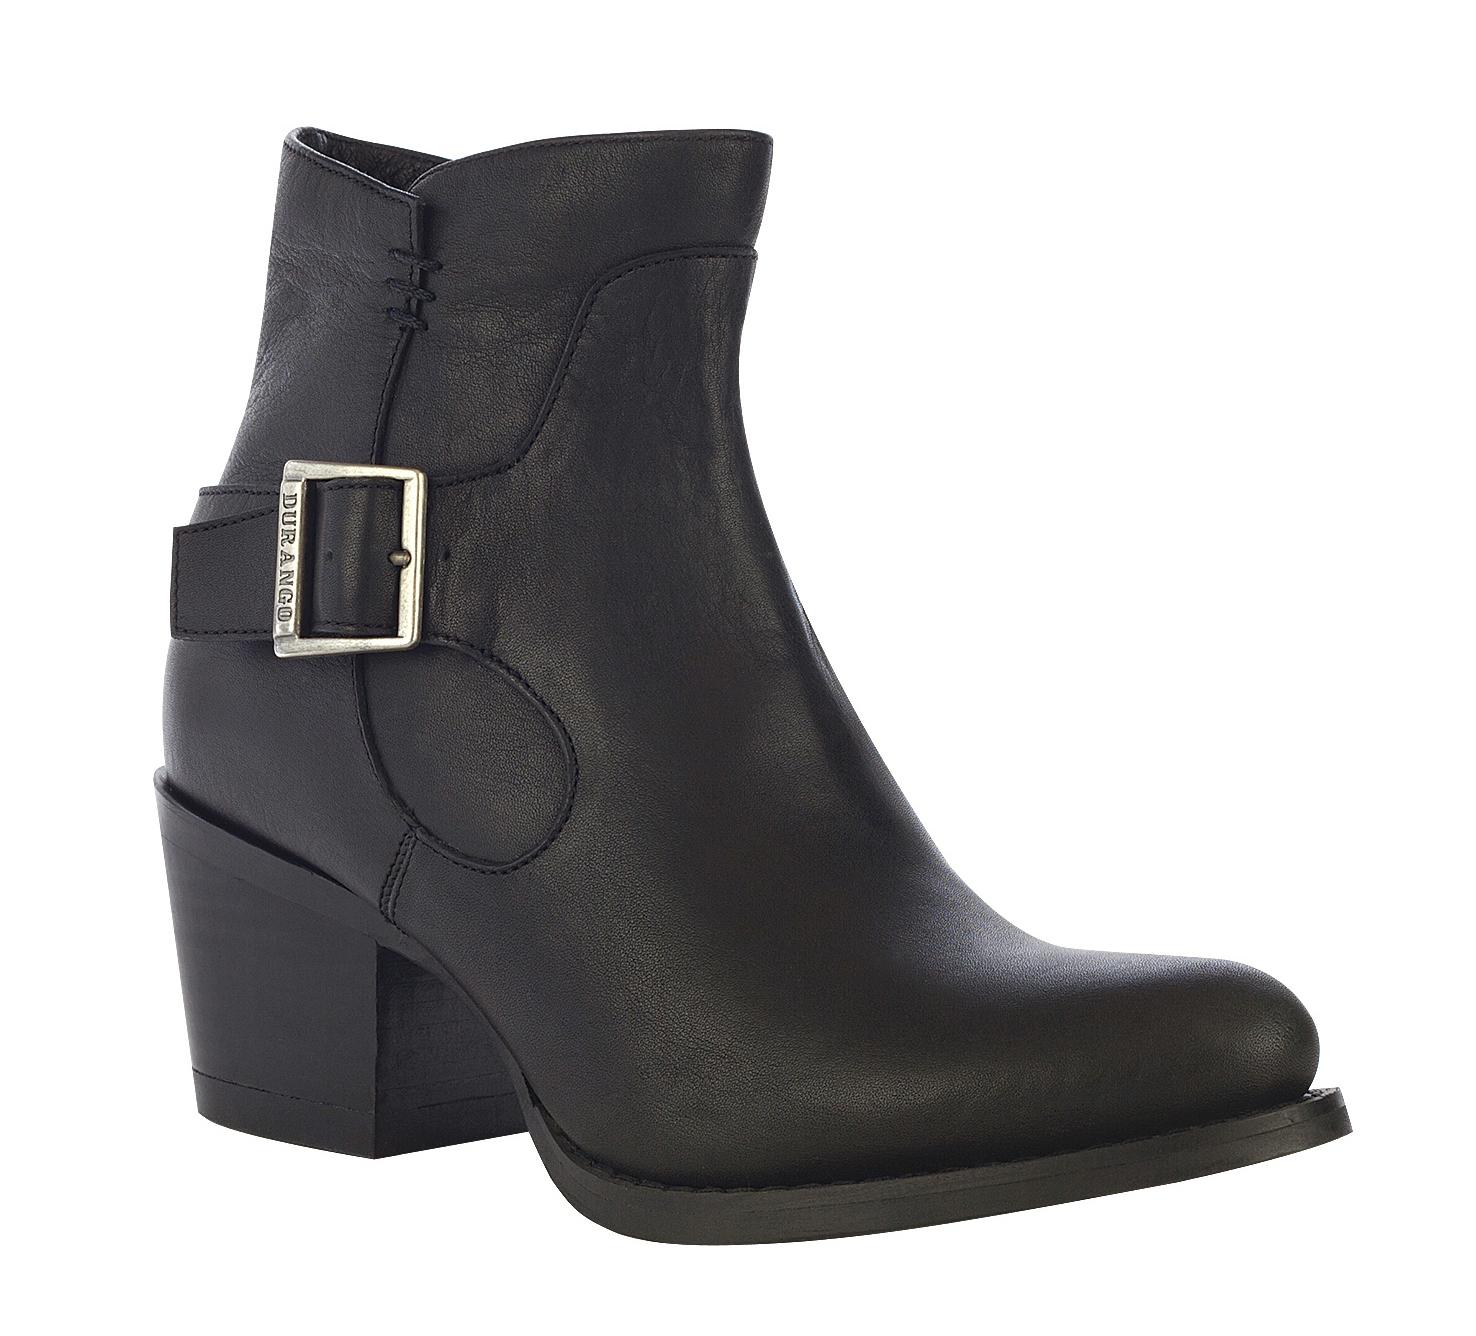 Durango City: Women's Short Black Leather Boots - Style #RD0457